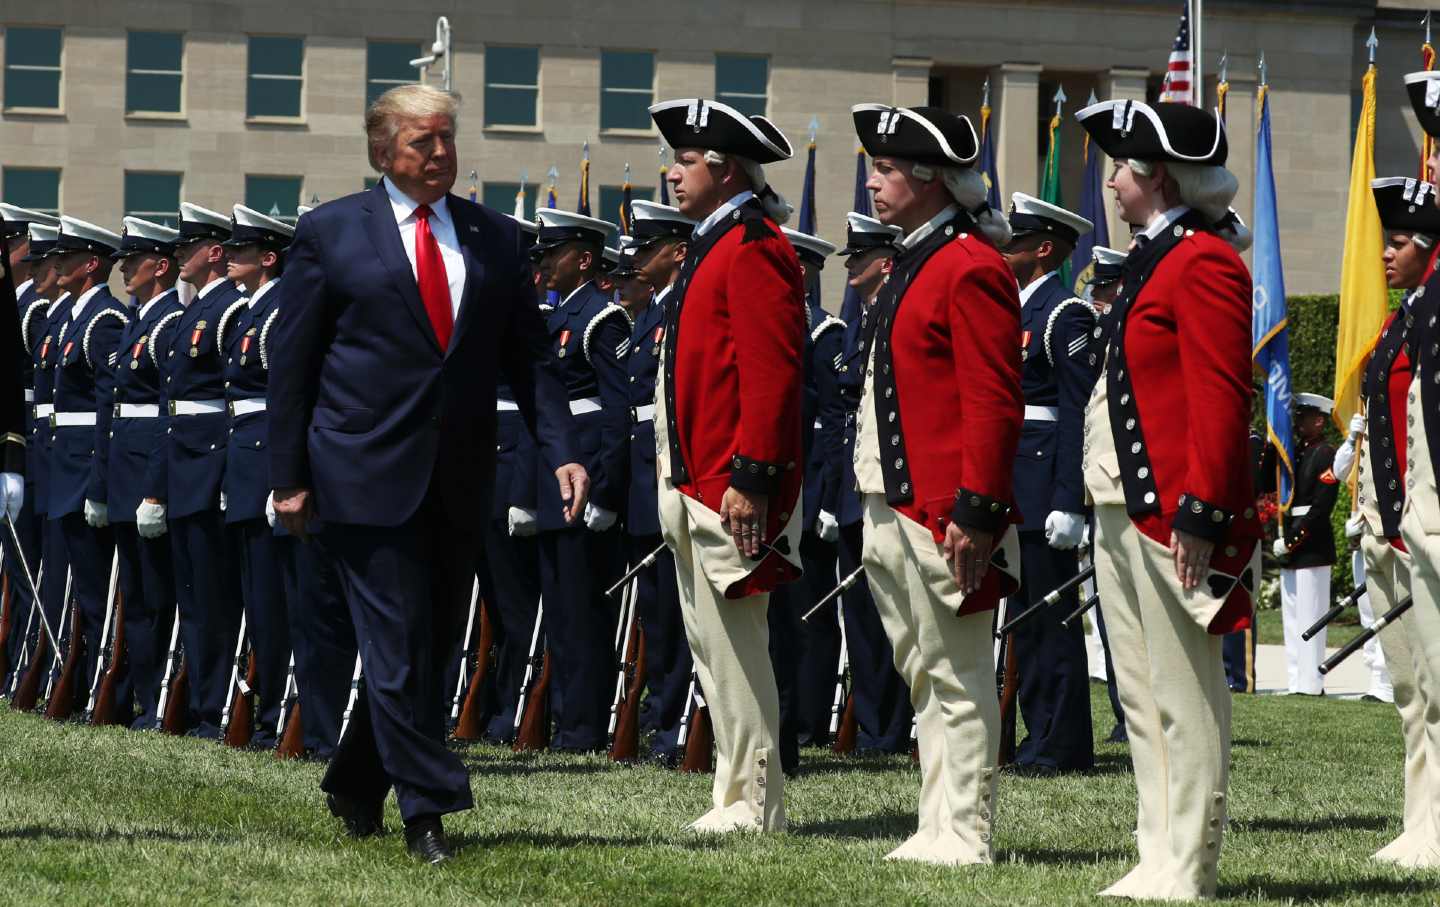 Donald Trump walks past a row of troops in full uniform.